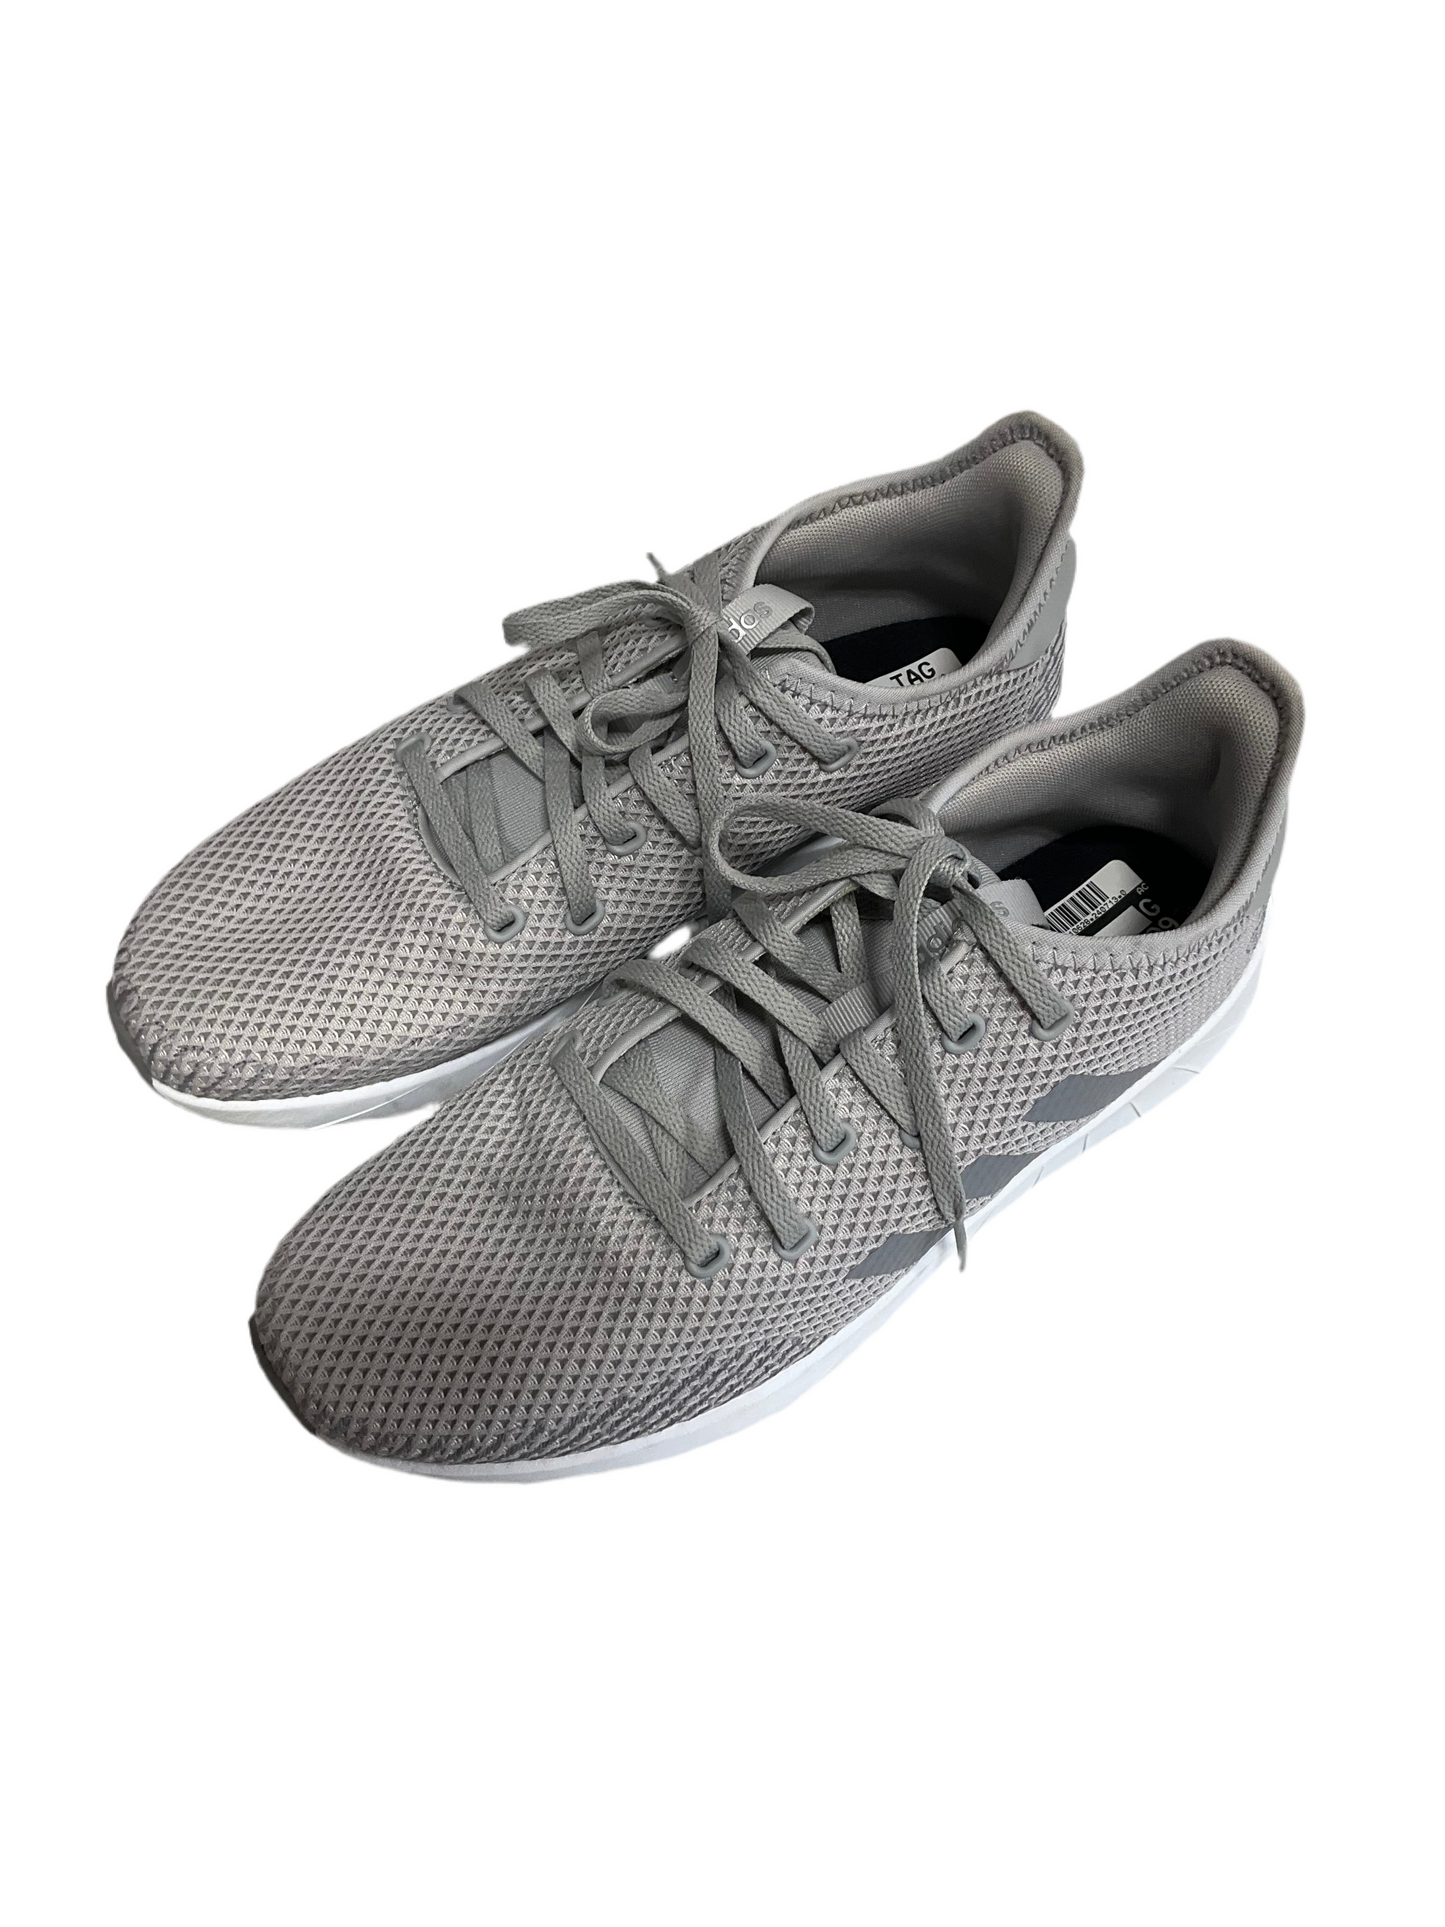 Grey Shoes Athletic Adidas, Size 9